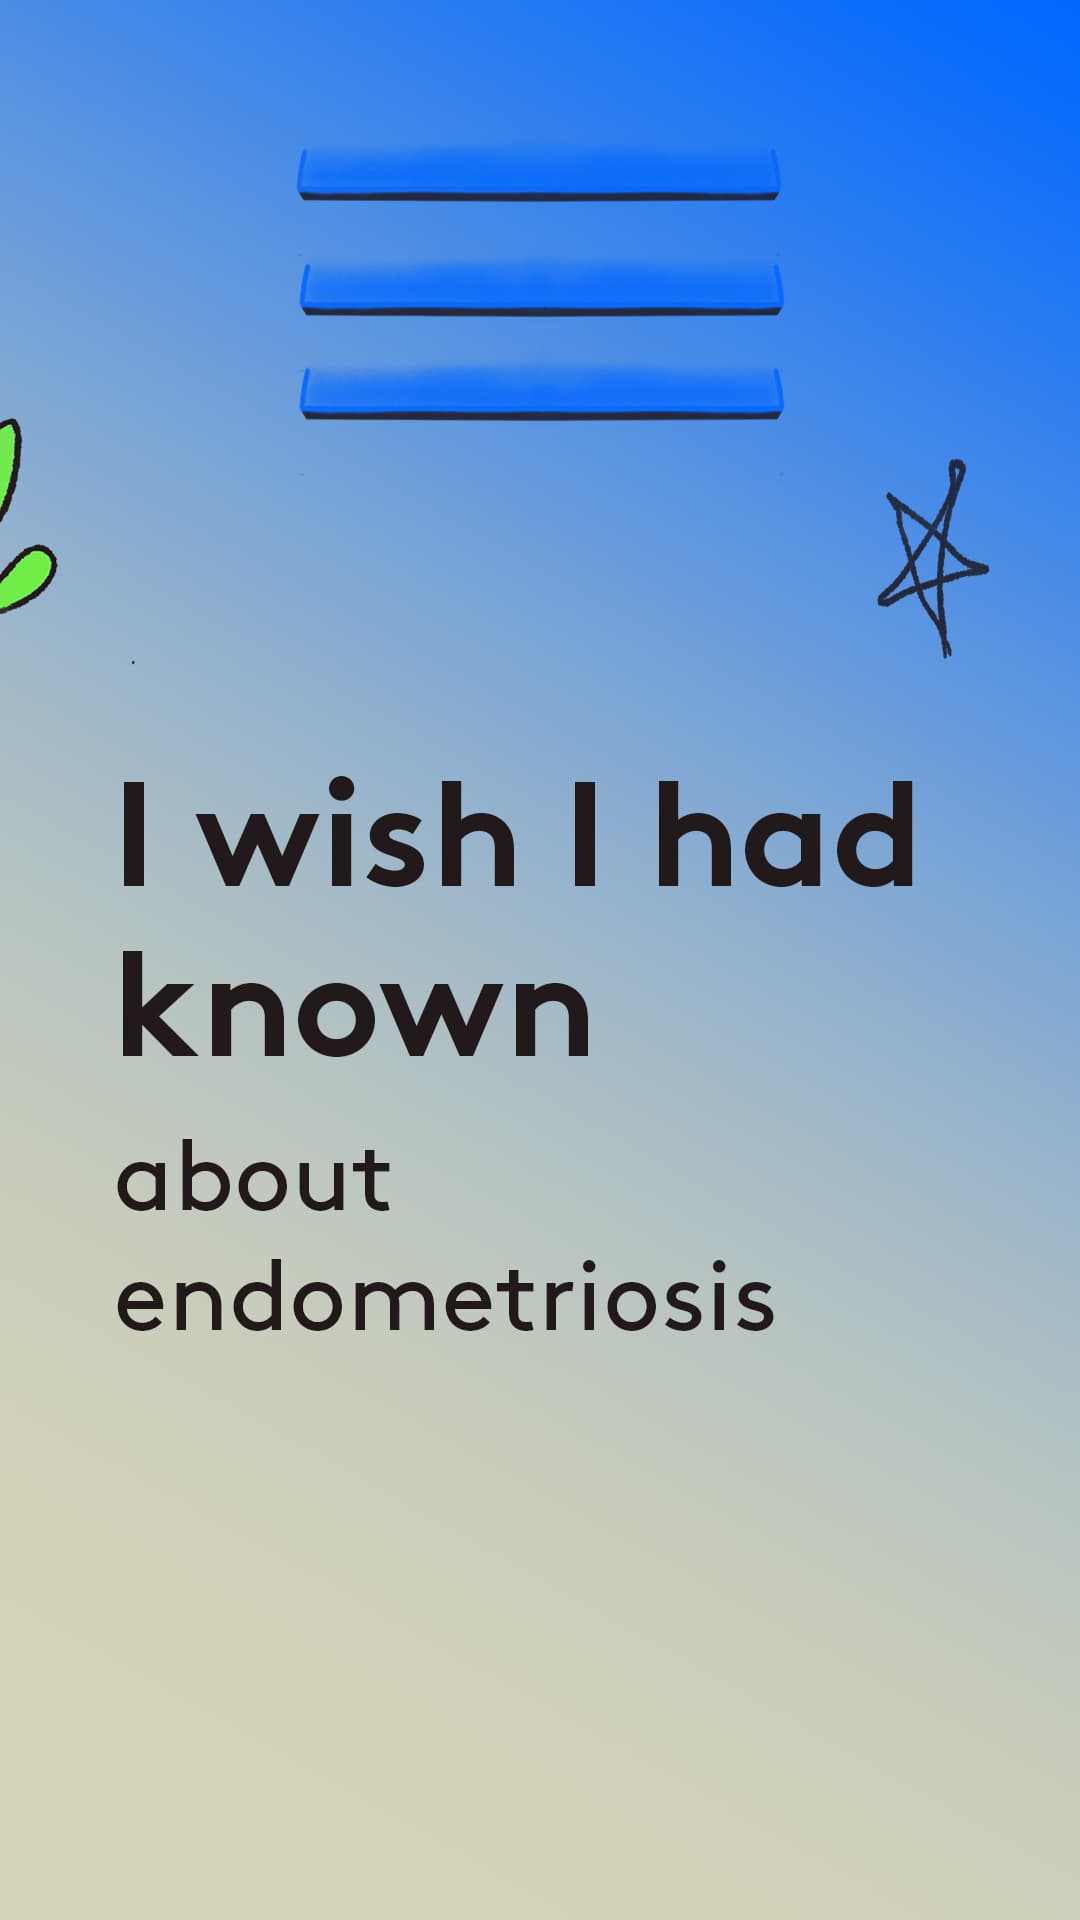 I wish i had known about endometriosis